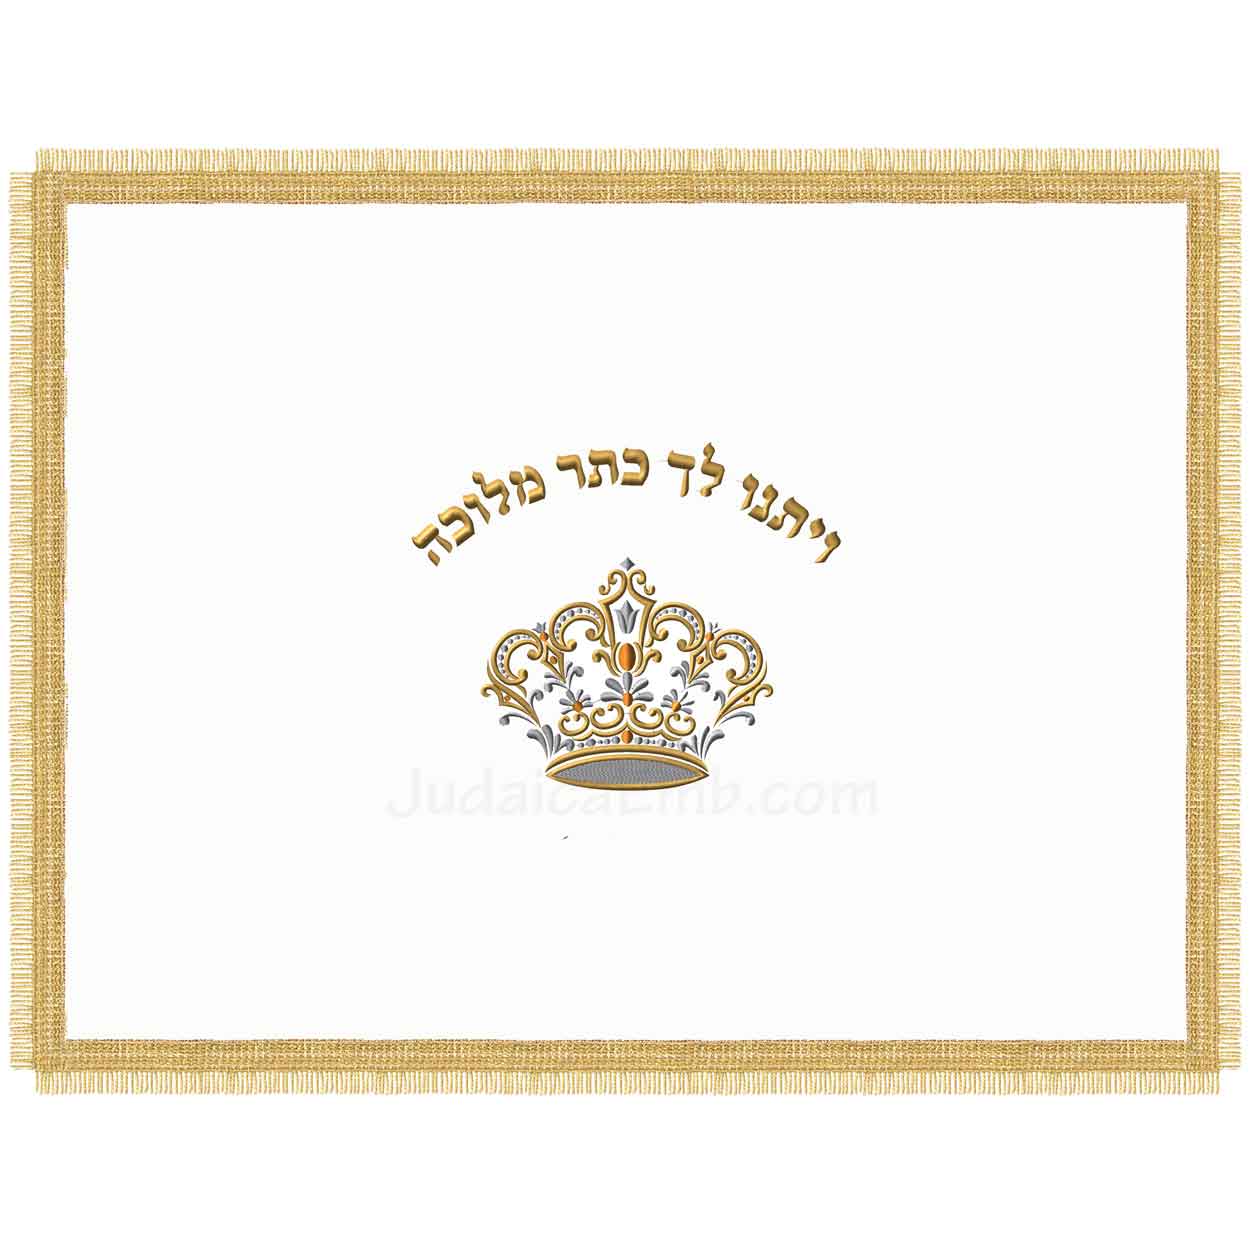 https://www.judaicaemb.com/images/bimah-cover-amud-covers-high-holidays-kesser-crown--bc466.jpg